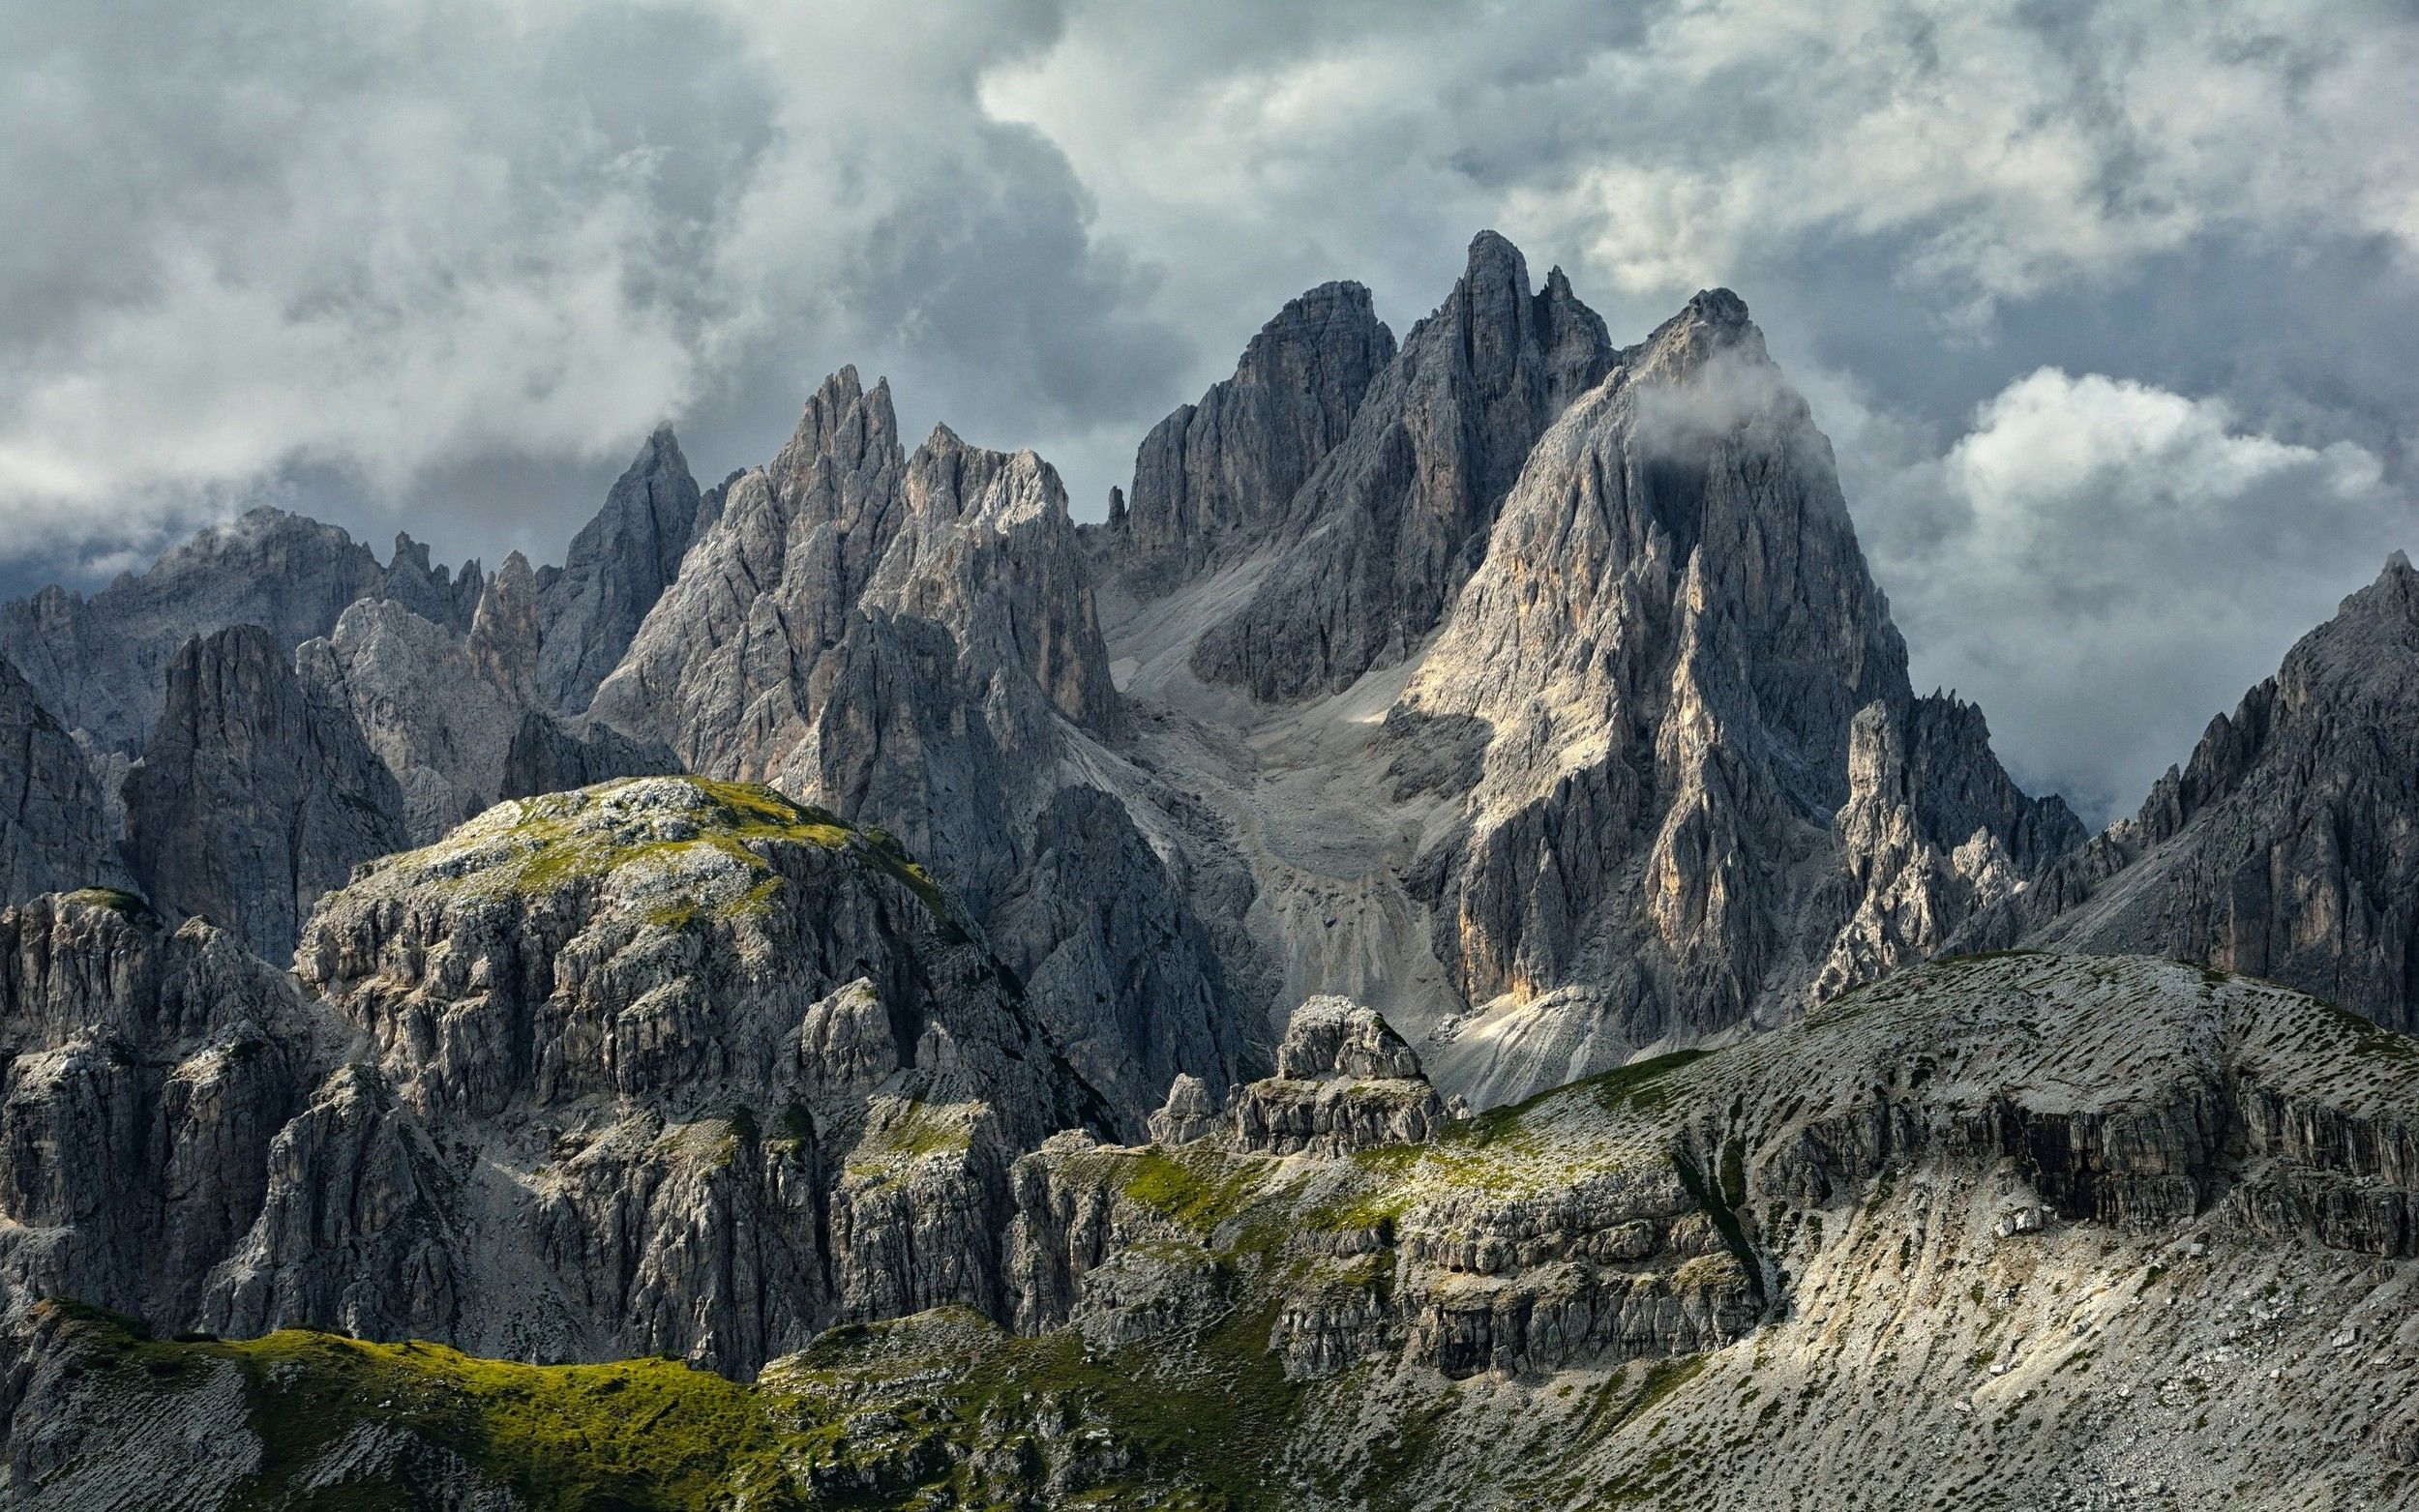 Dolomites Wallpaper. Dolomites Wallpaper, Dolomites Italian Desktop Wallpaper and Dolomites MTN Wallpaper